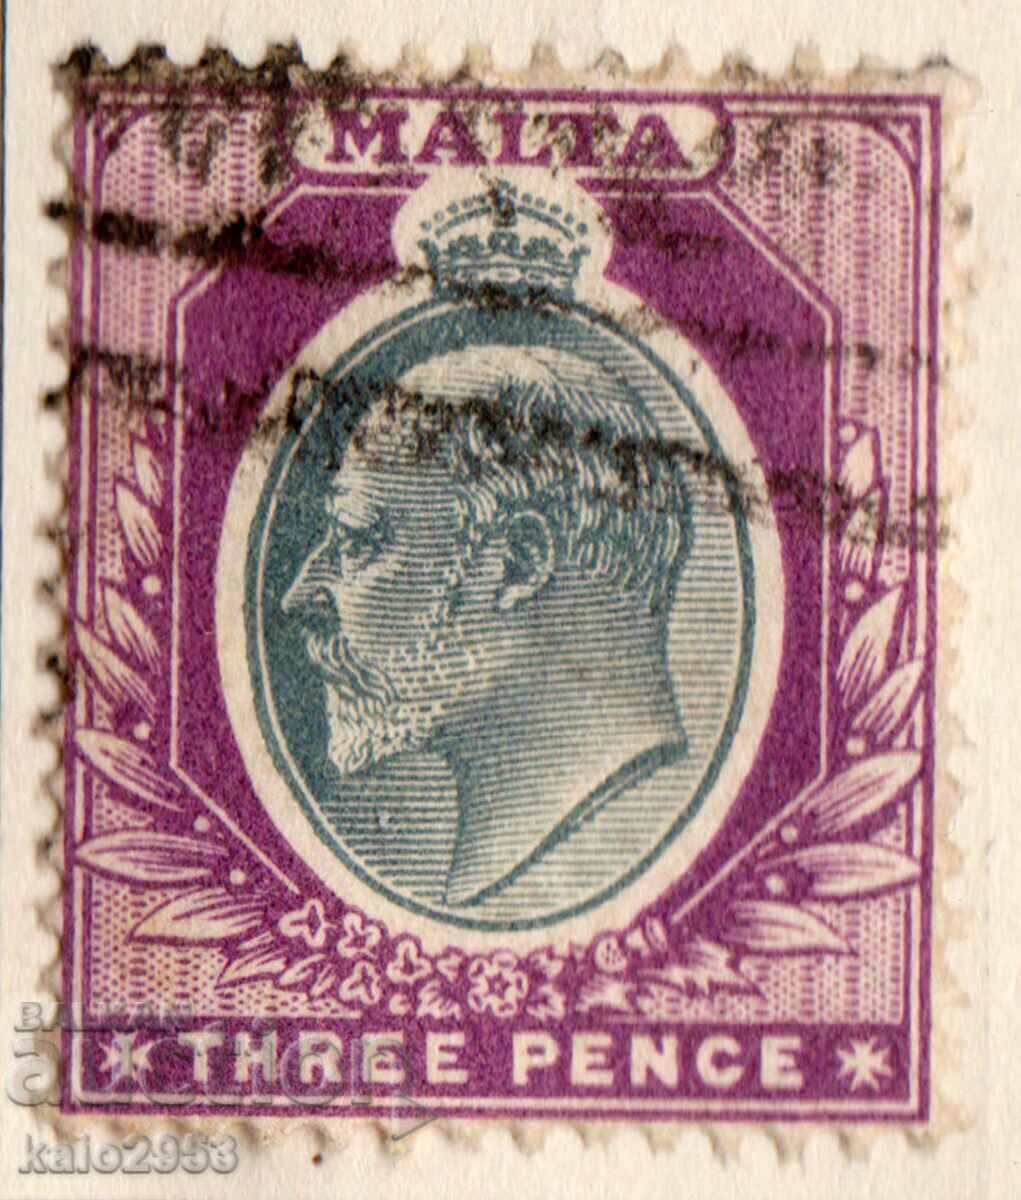 GB/Malta-1903-Regular-KE VII, γραμματόσημο